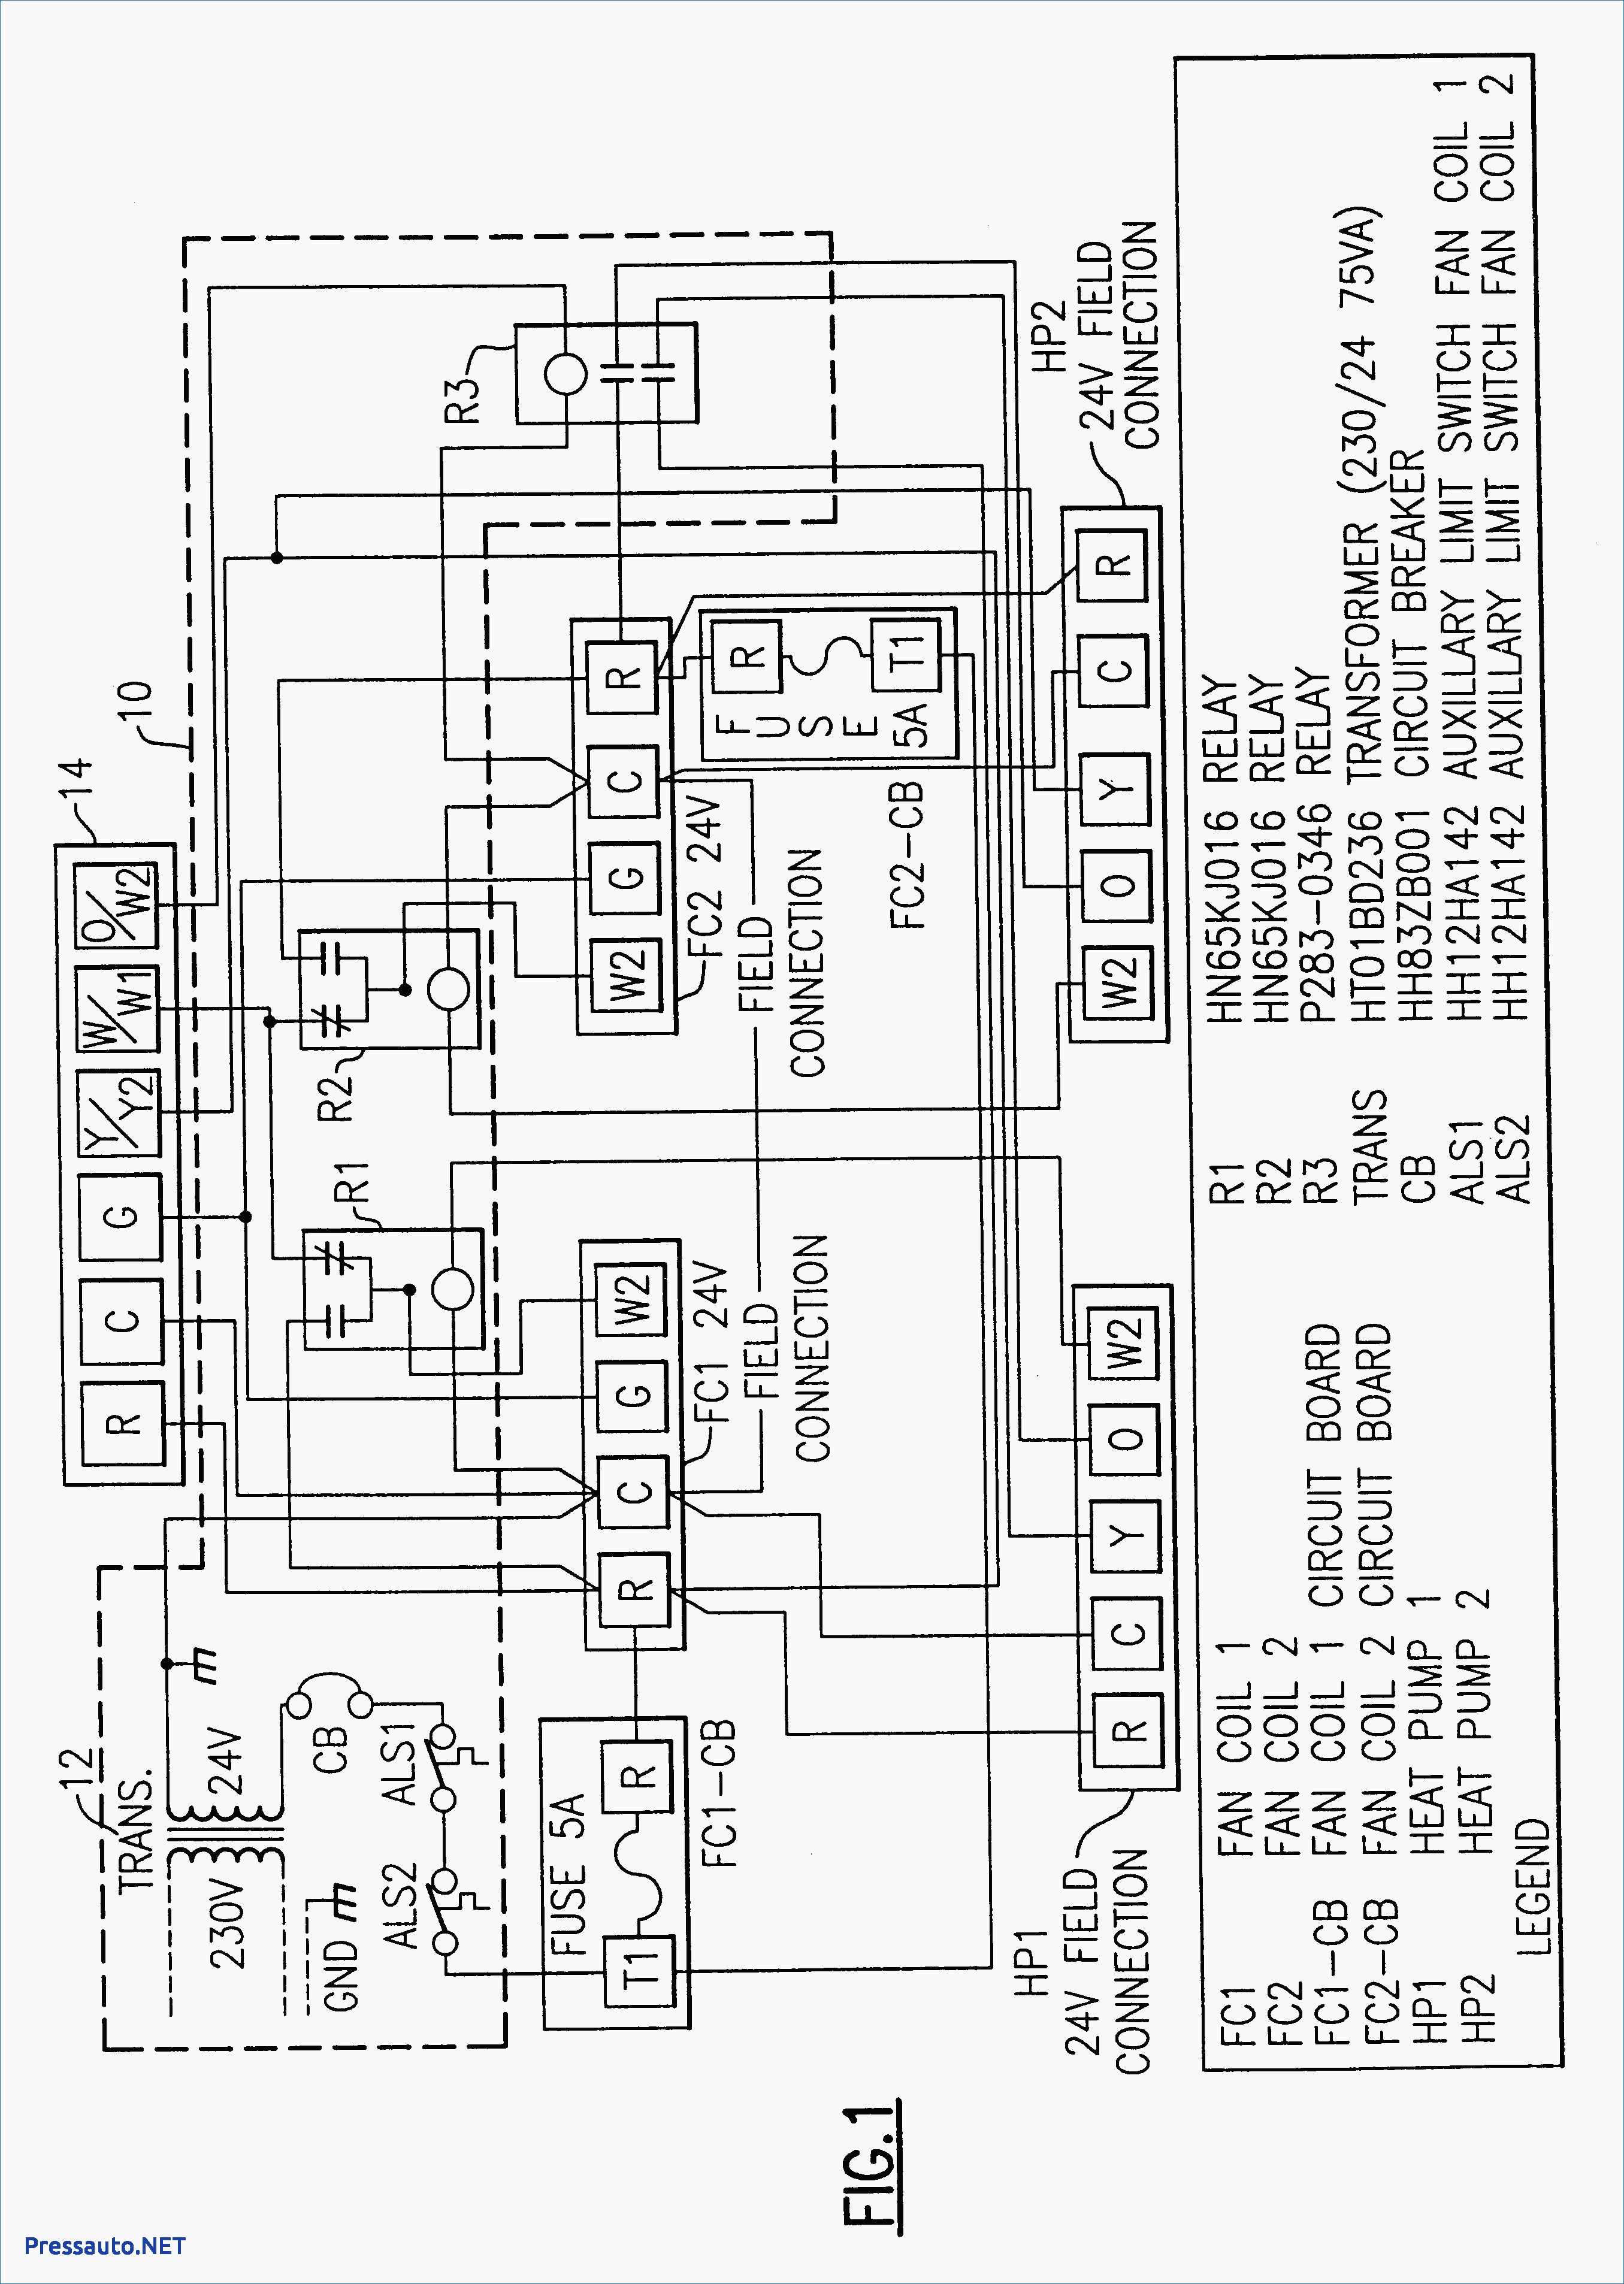 newair g73 parts l wiring diagram 0 natebird me stunning rh releaseganji net Dayton G73 Electric